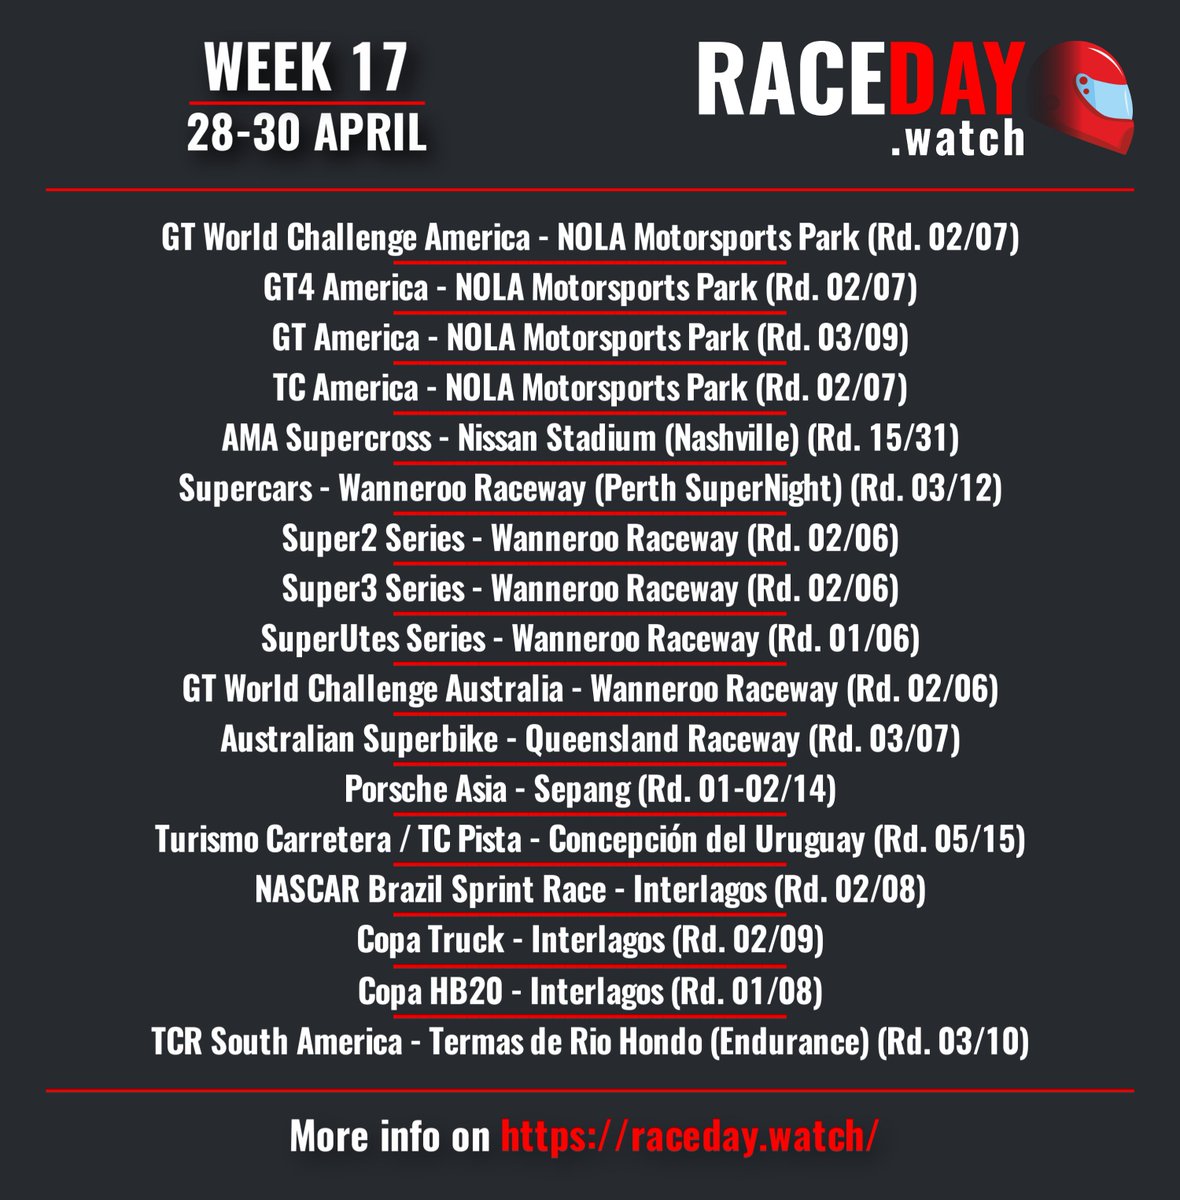 Week 17 on RaceDay.watch!

@F1 / #AzerbaijanGP
@Formula2 
@FIAWEC / #6HSpa
@MotoGP / #SpanishGP
@FIAWorldRX 
@mxgp 
@IndyCar 
@NASCAR 
@NASCAR_Xfinity 
@GT_Open 
@EF_Open 
@TCR_Series 
@f1academy 
@FerrariRaces 
@OfficialBSB 
@gtworldcham 
@supercars 
@GTWorldChAUS